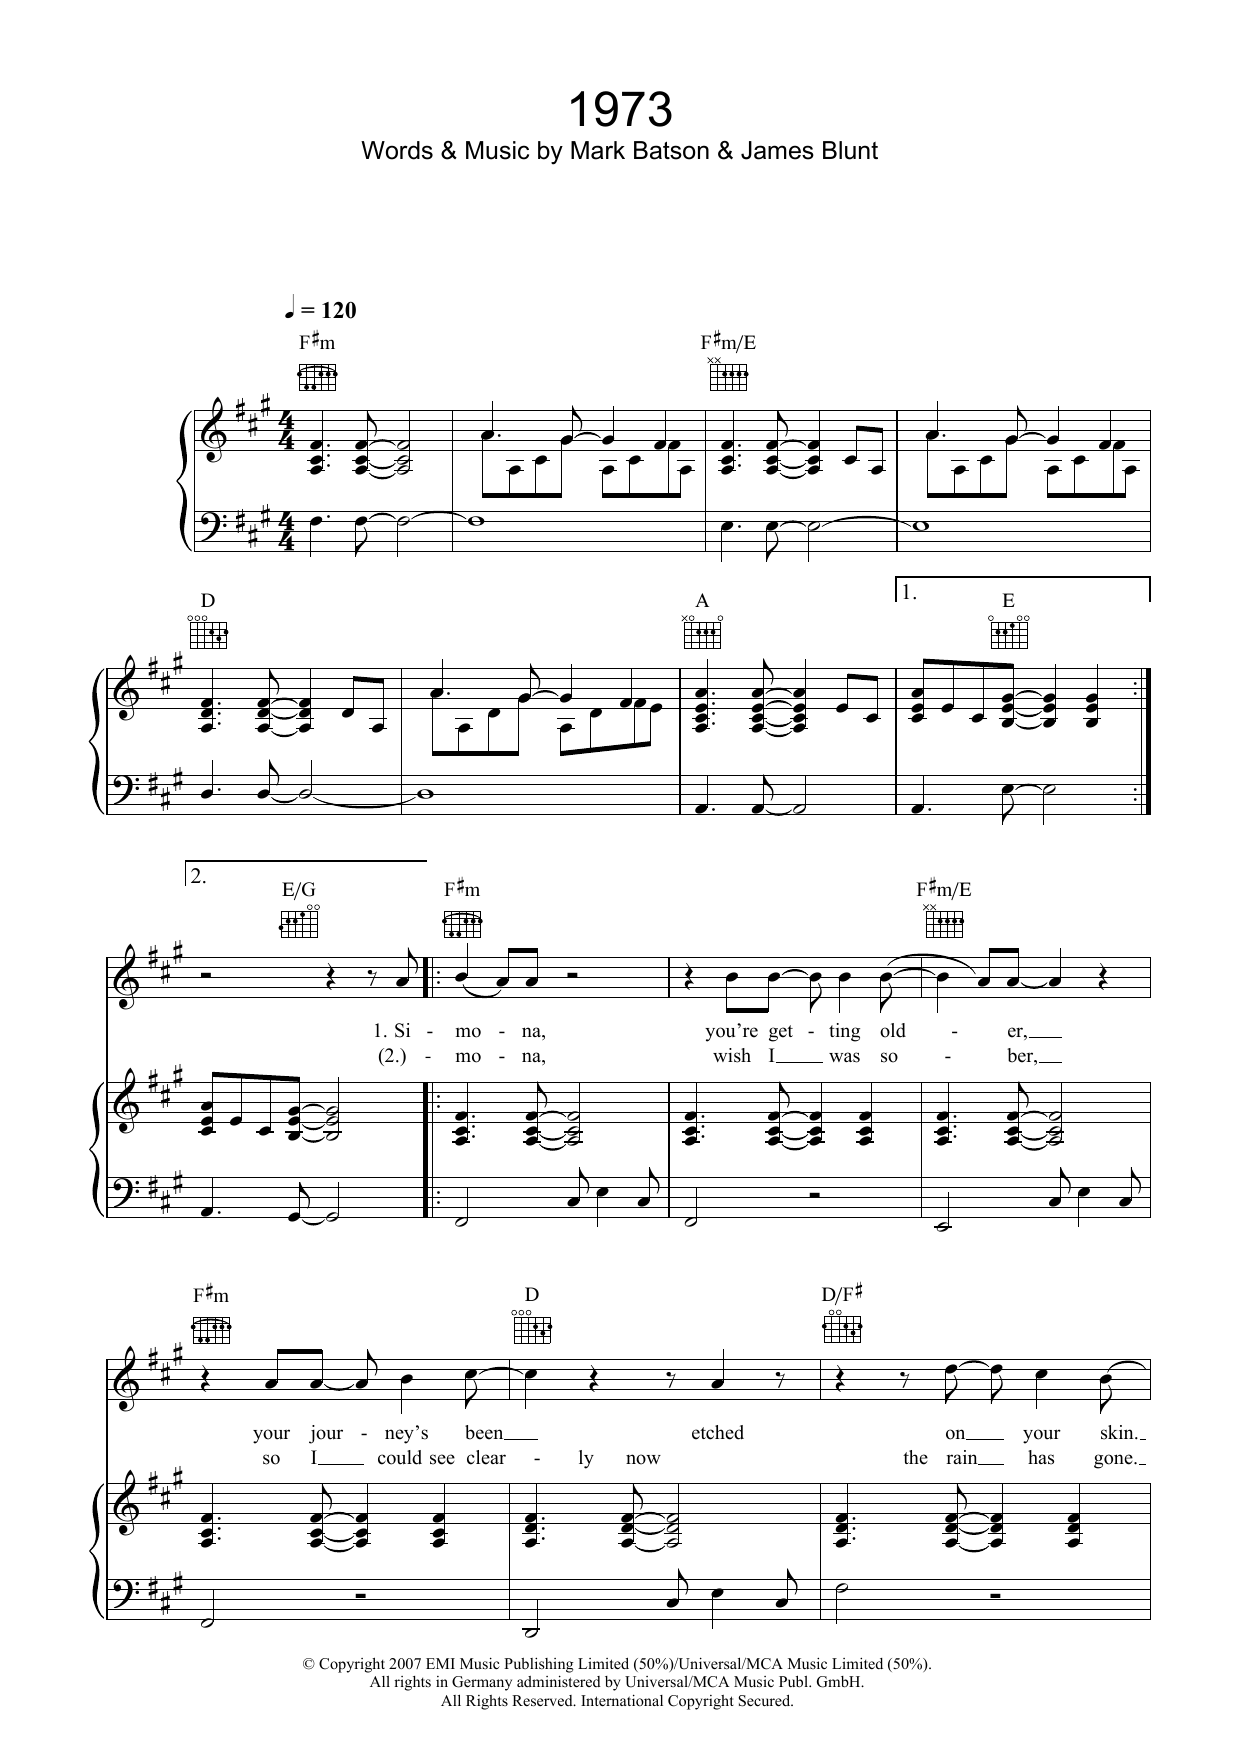 James Blunt 1973 Sheet Music Notes & Chords for Flute - Download or Print PDF